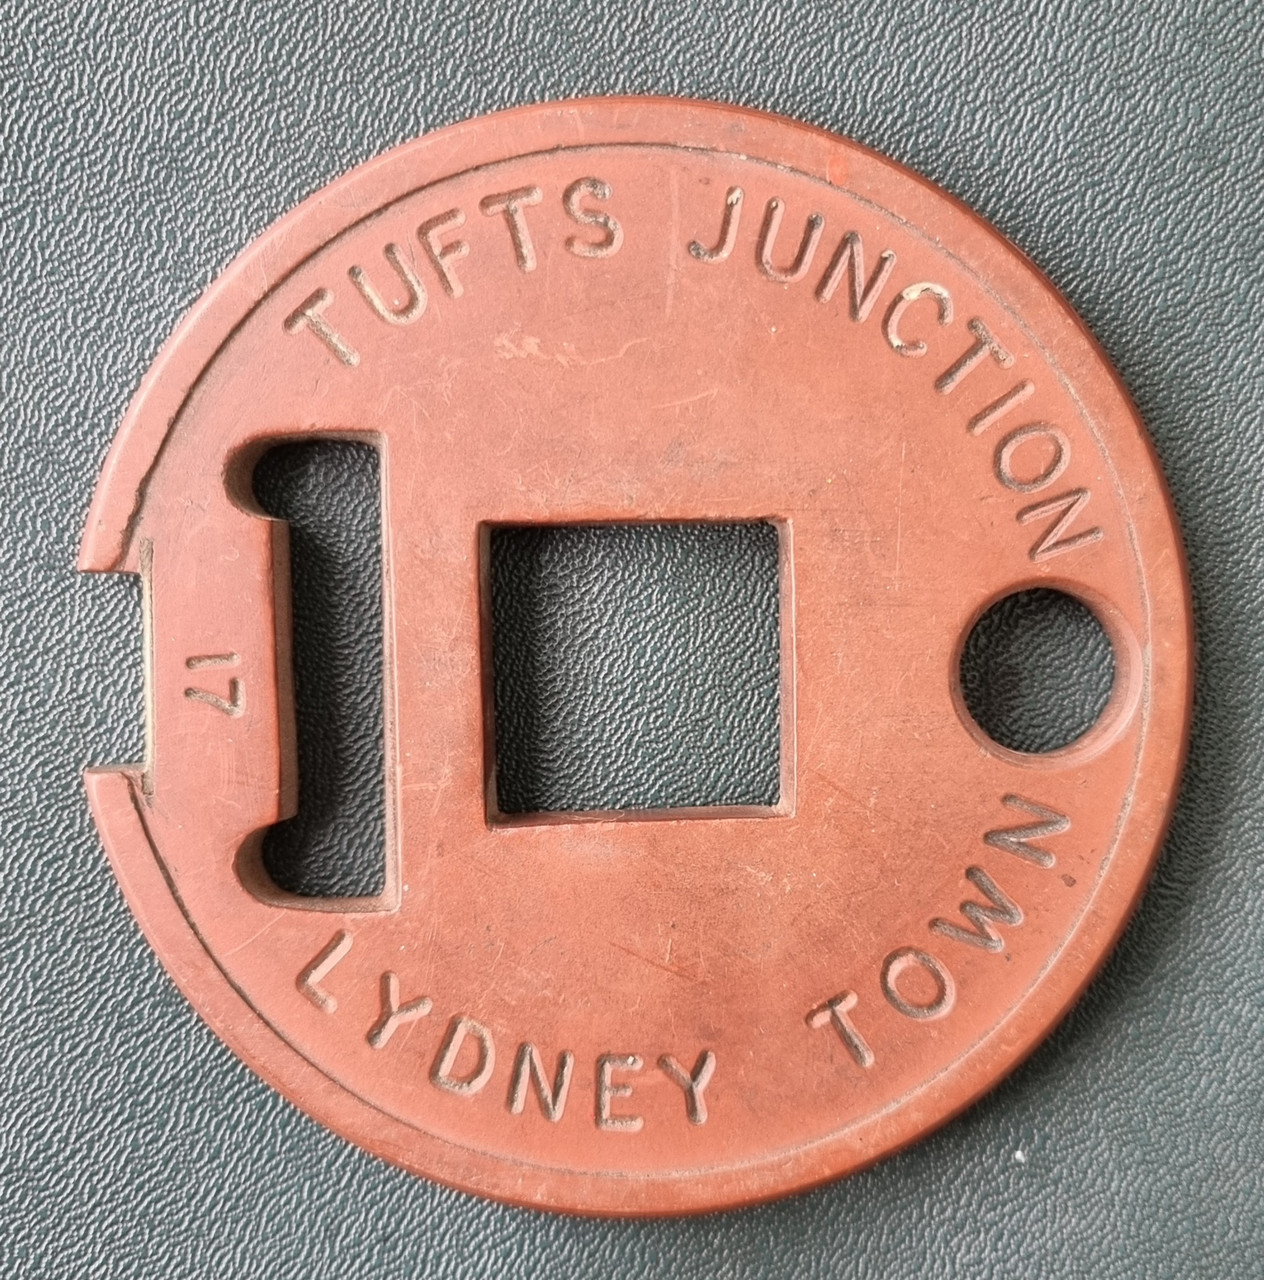 VT 6192  G.W.R. TYERS NO 6 FIBRE TABLET "TUFFTS JUNCTION-LYDNEY TOWN"